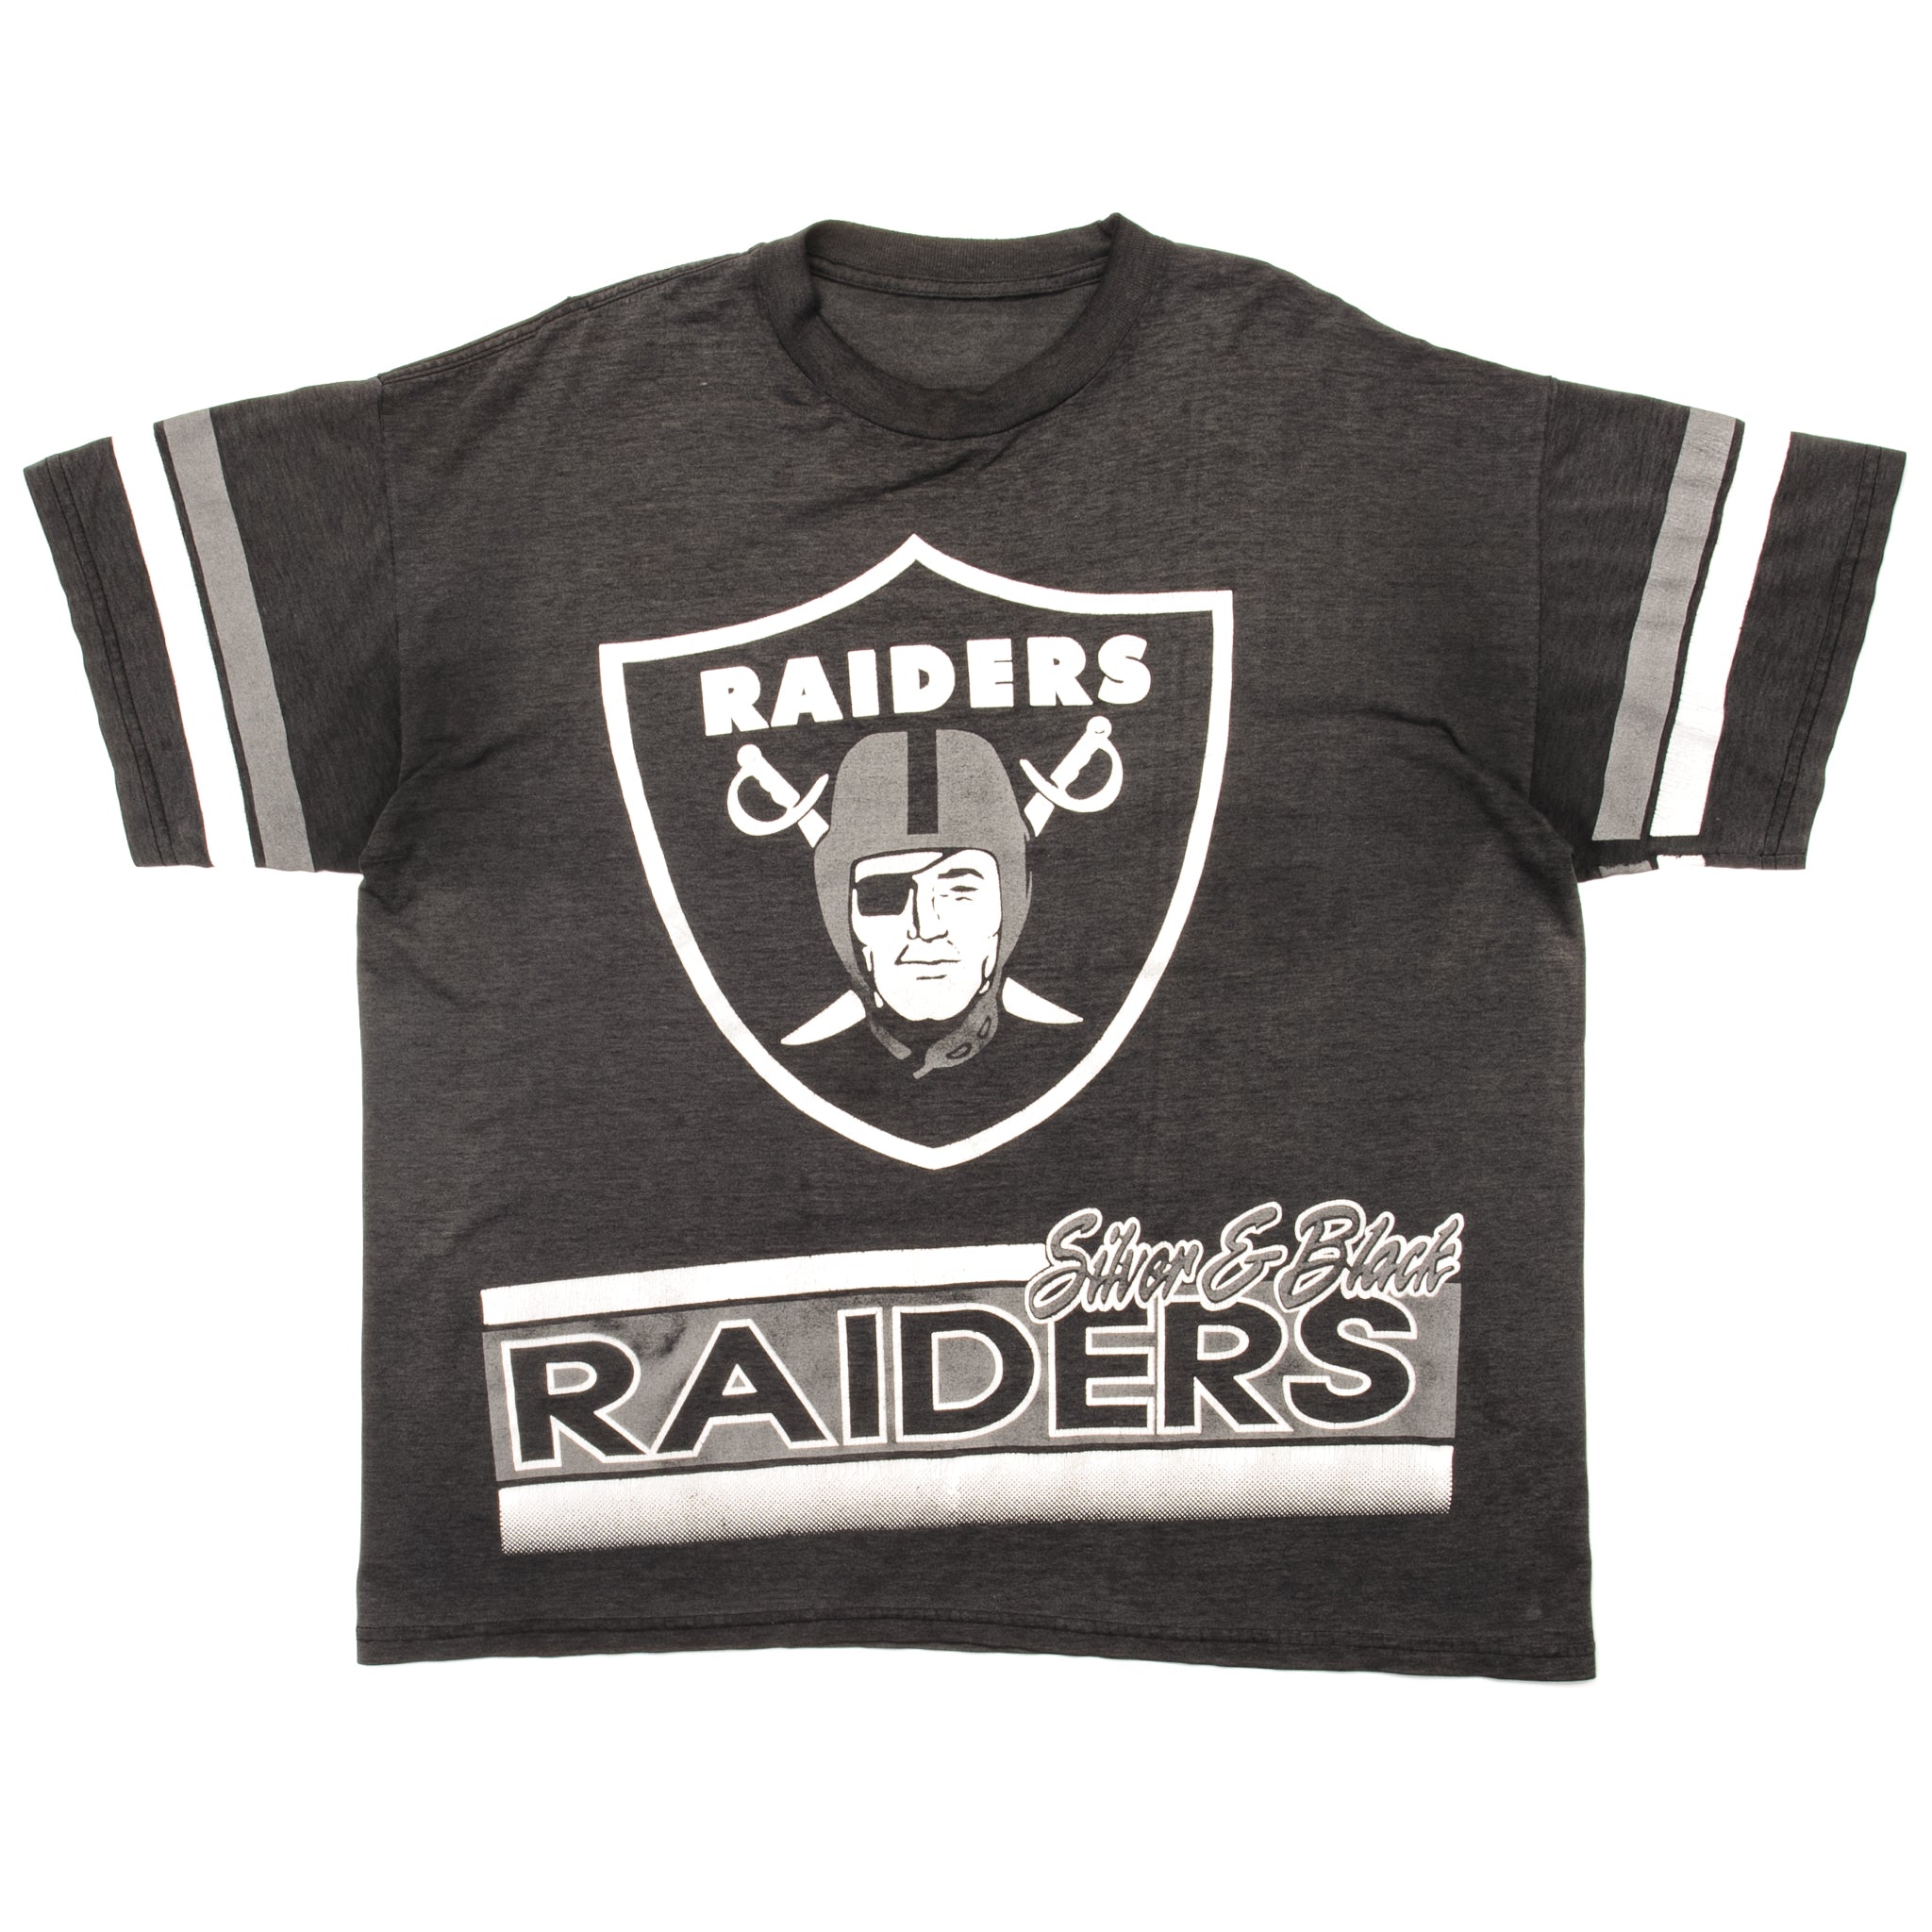 RARE NFL Team Apparel 1960 Vintage Style OAKLAND RAIDERS Long Sleeve Shirt  XL